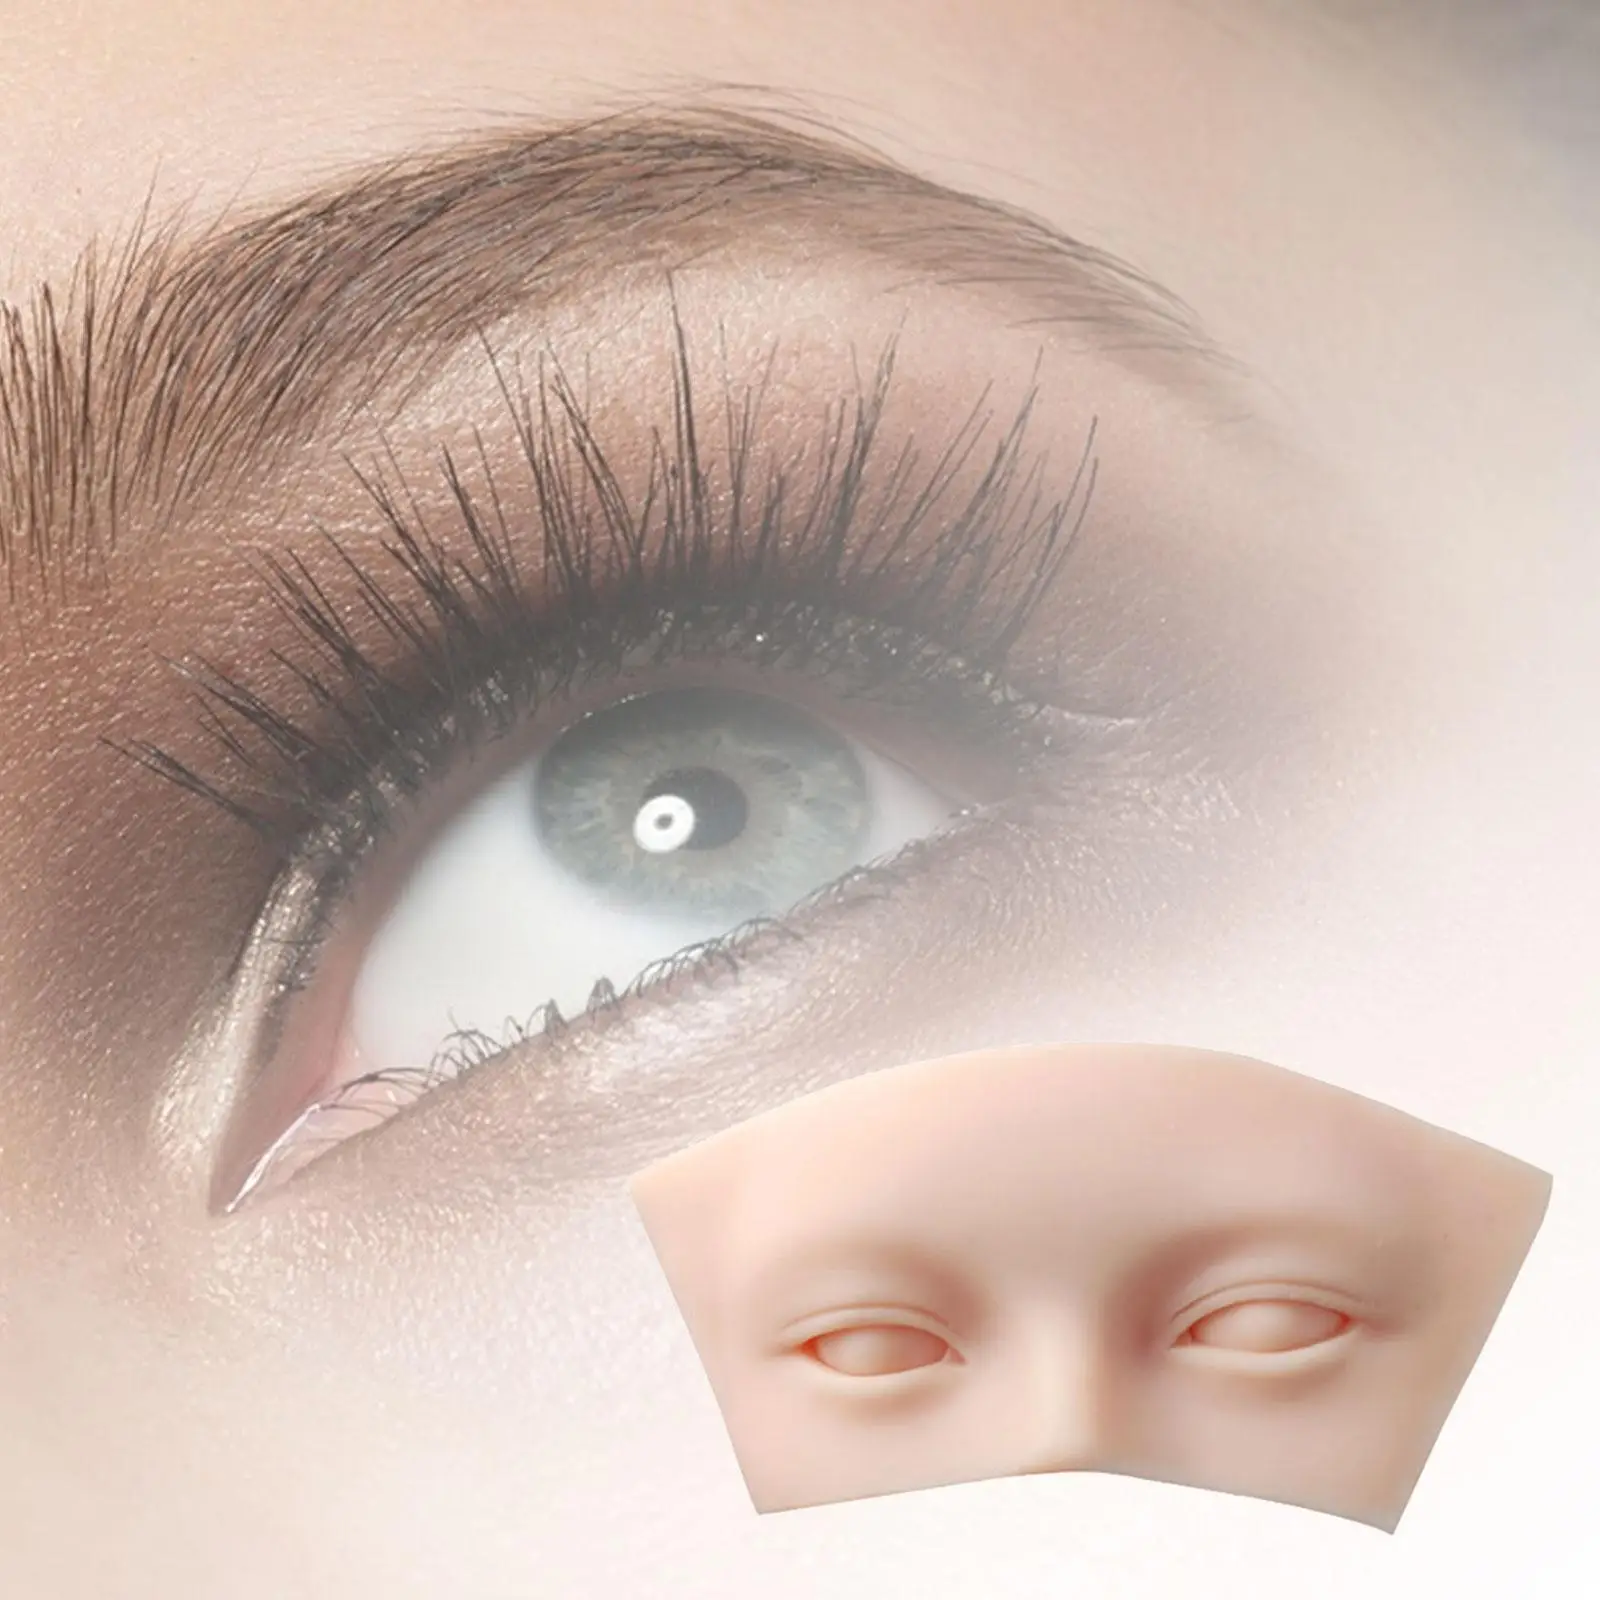 Training Pad Durable Reusable Silicone Eye Makeup Cosmetology